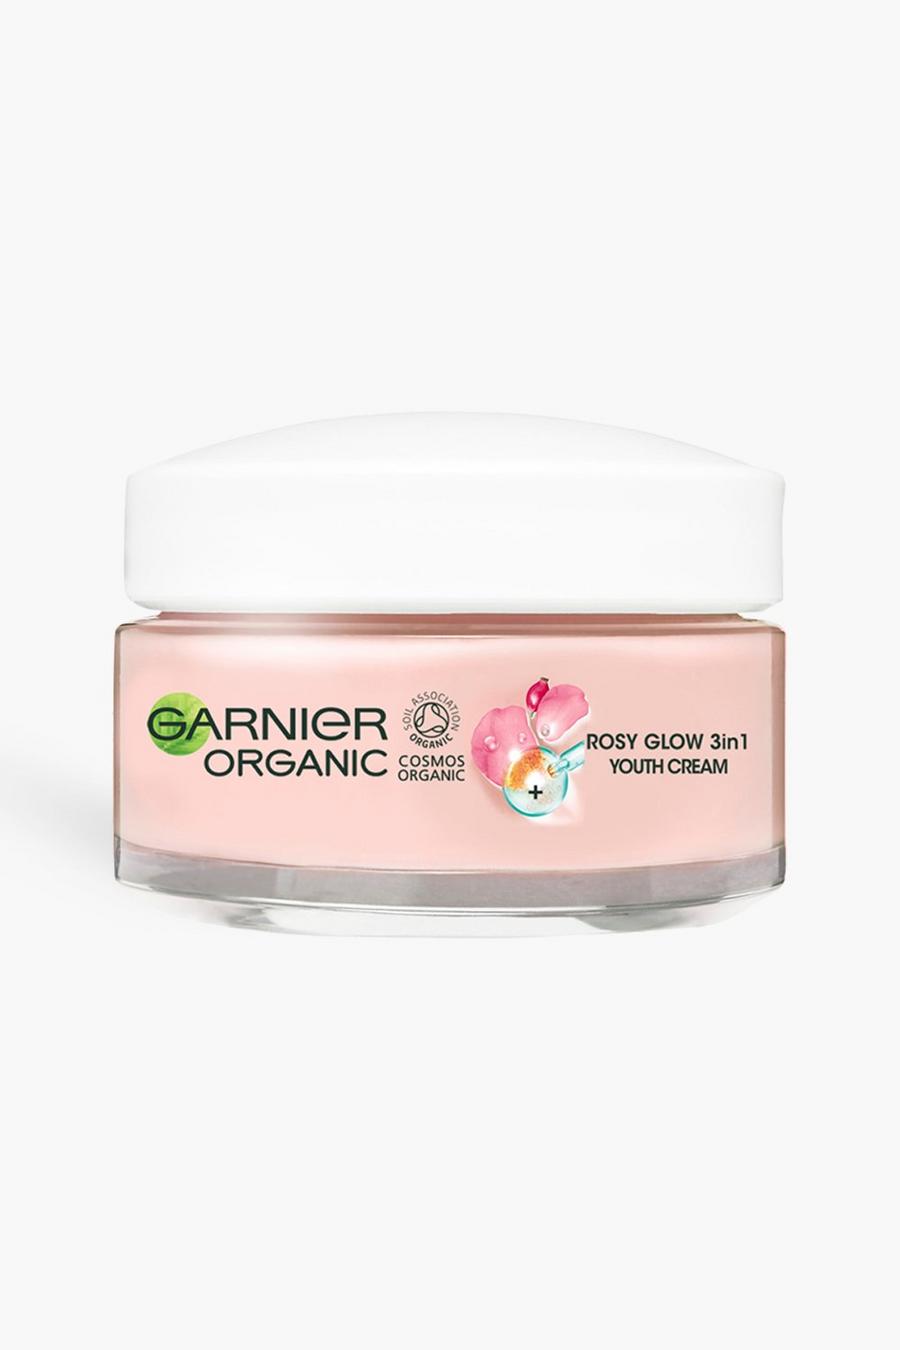 Rose pink Garnier Organic Rosy Glow 3in1 Youth Cream